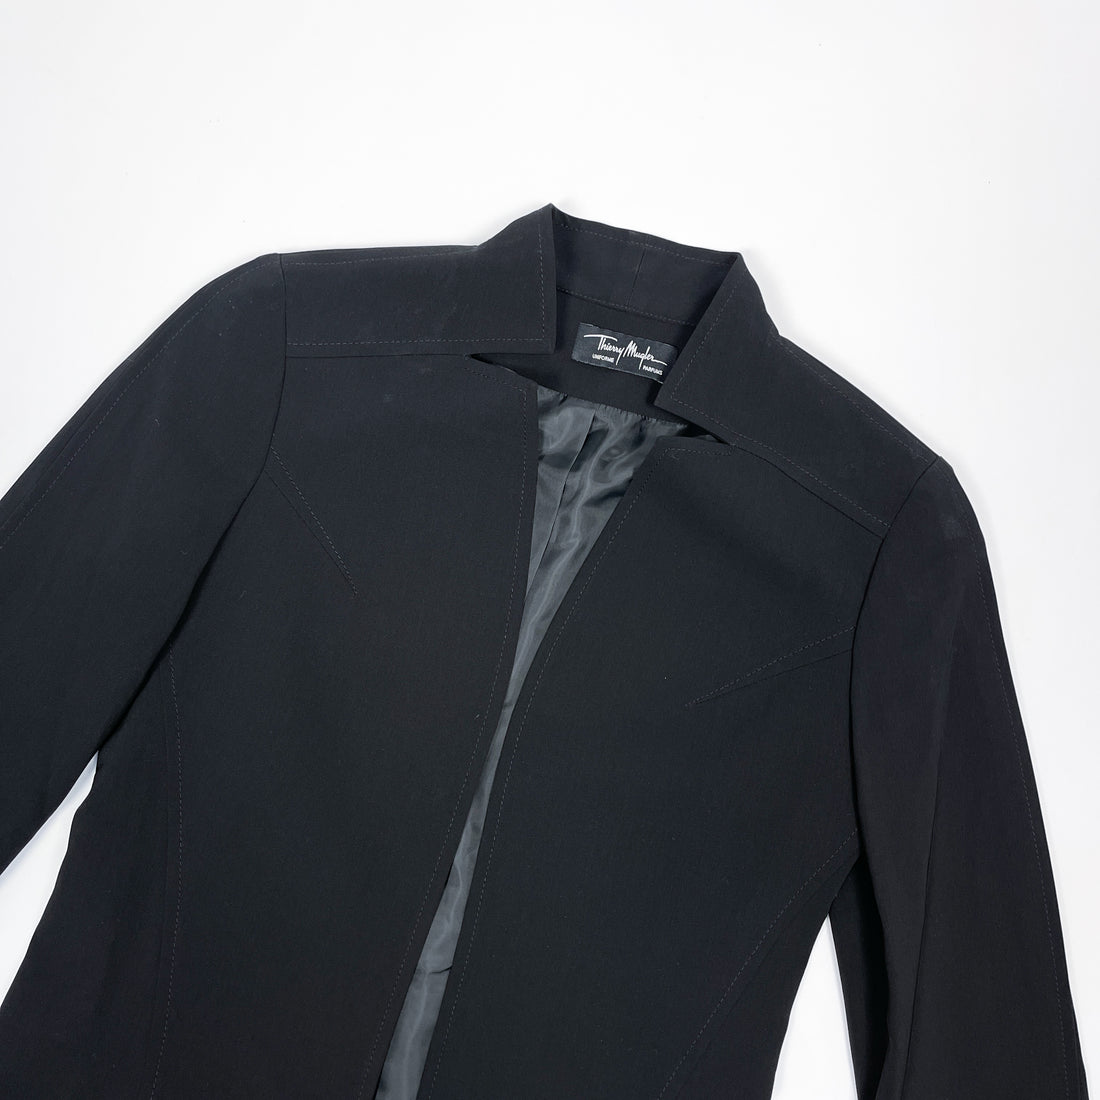 Thierry Mugler Uniforme Black Cut Jacket 1990's